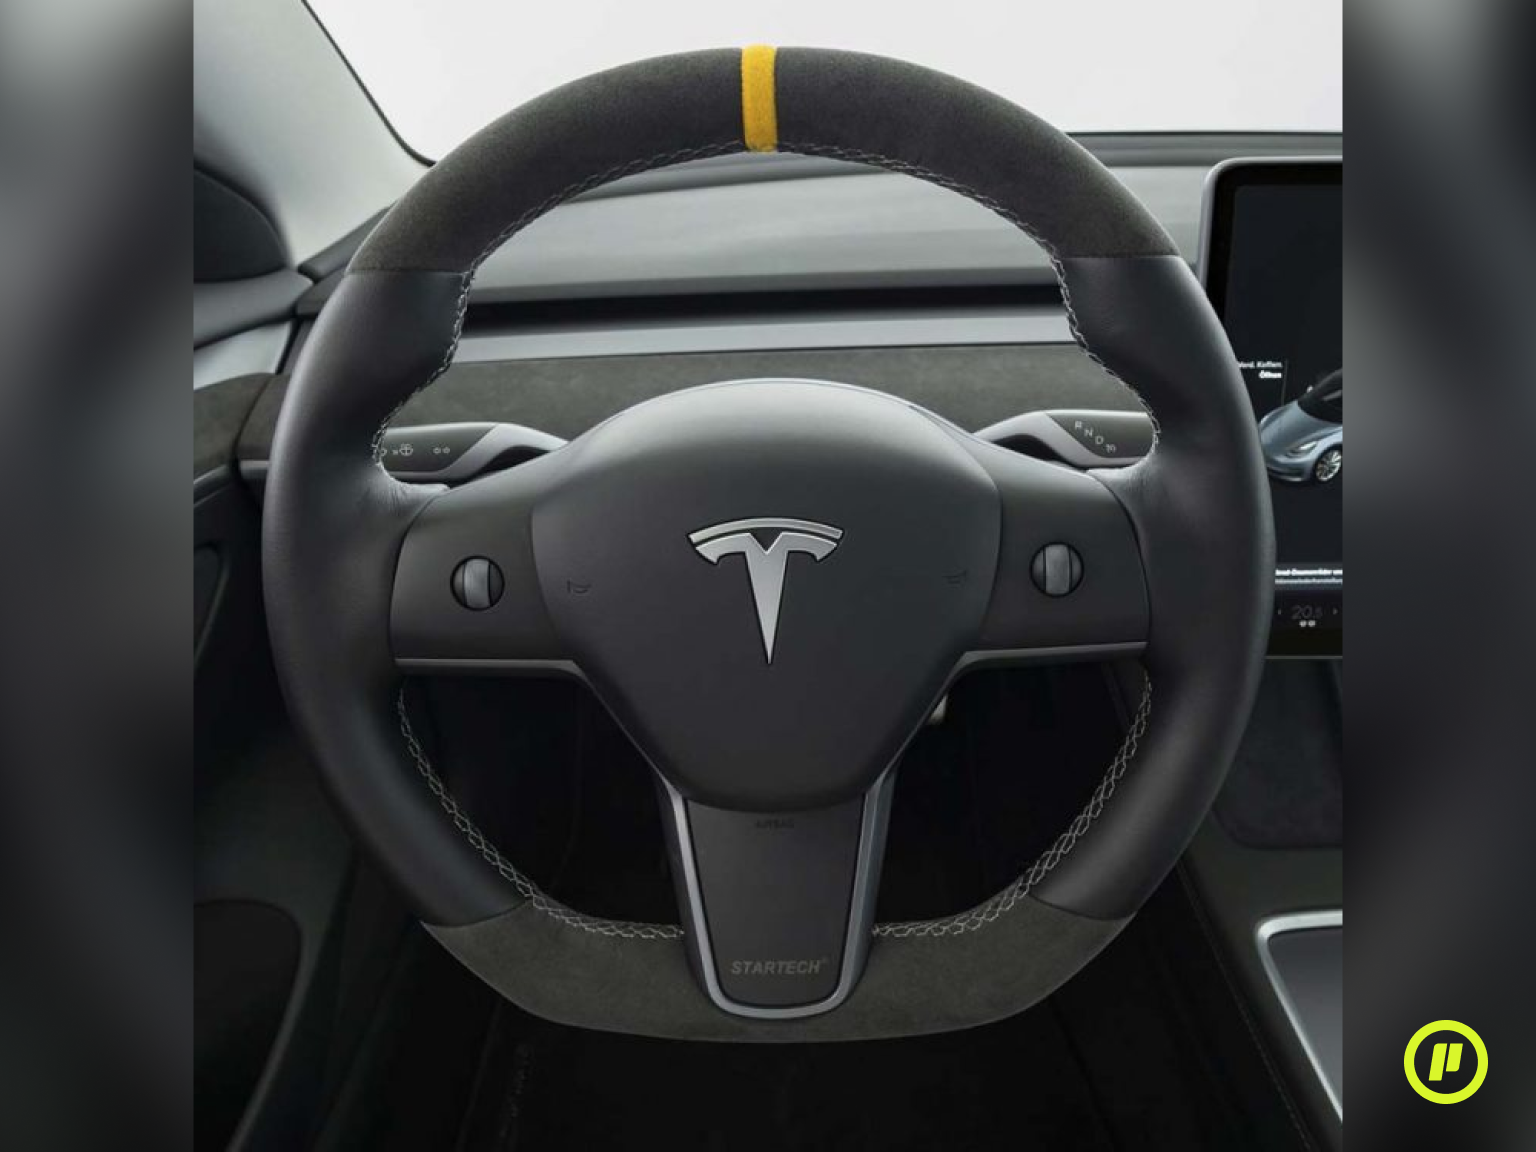 STARTECH Roof Spoiler for Tesla Model Y